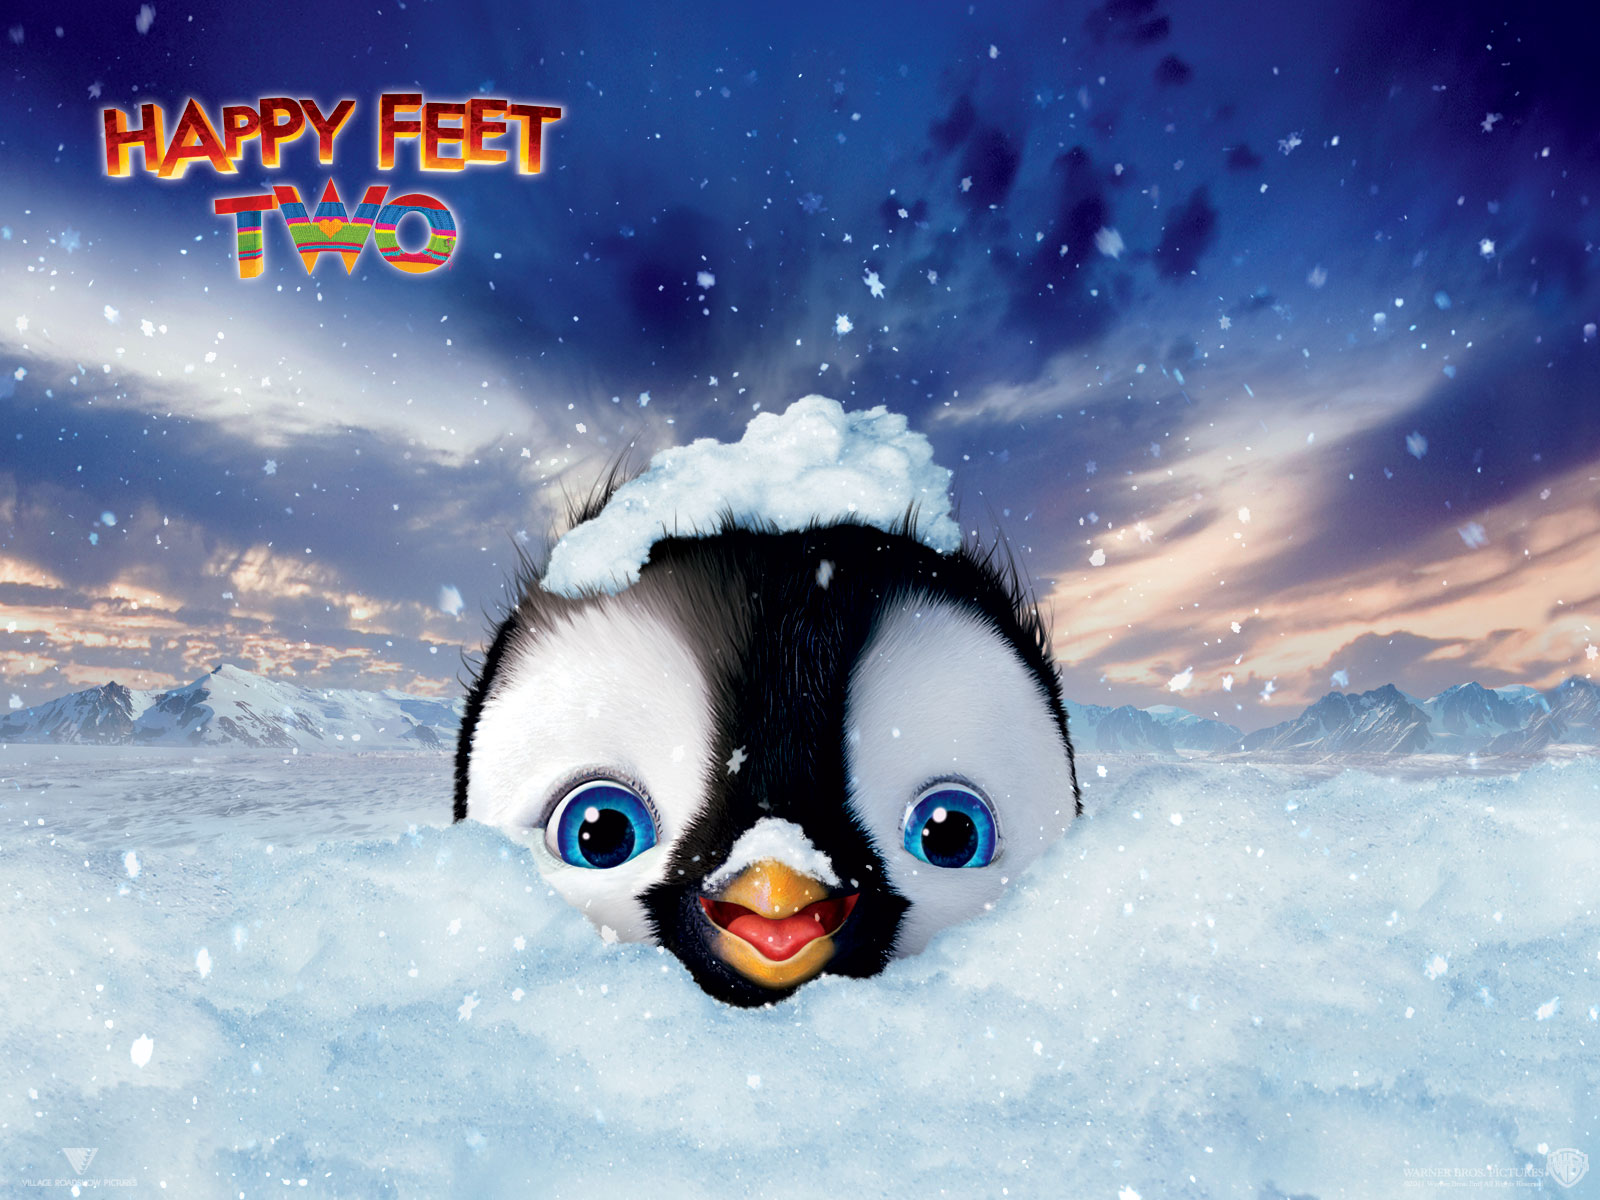 Happy Feet 2 Full Movie Online Free No Surveys